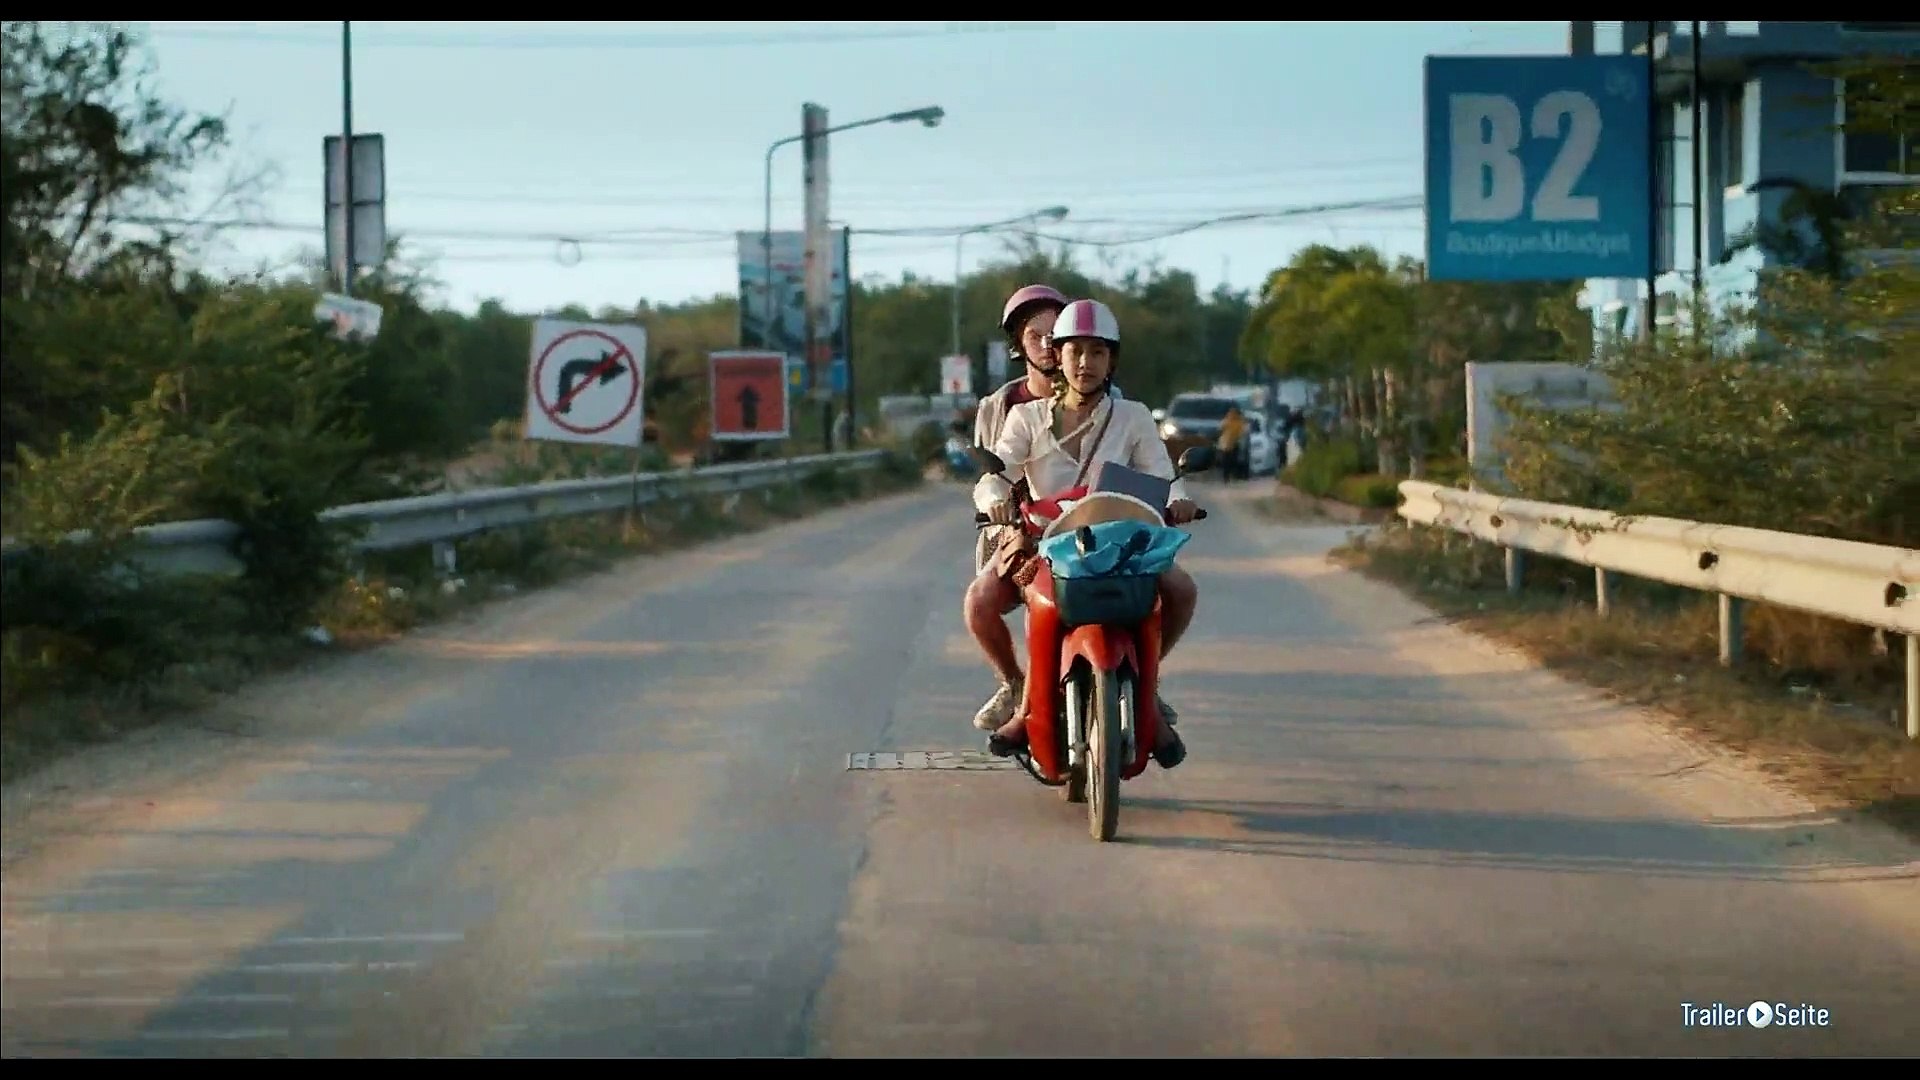 Patong Girl Trailer (2014) - video Dailymotion